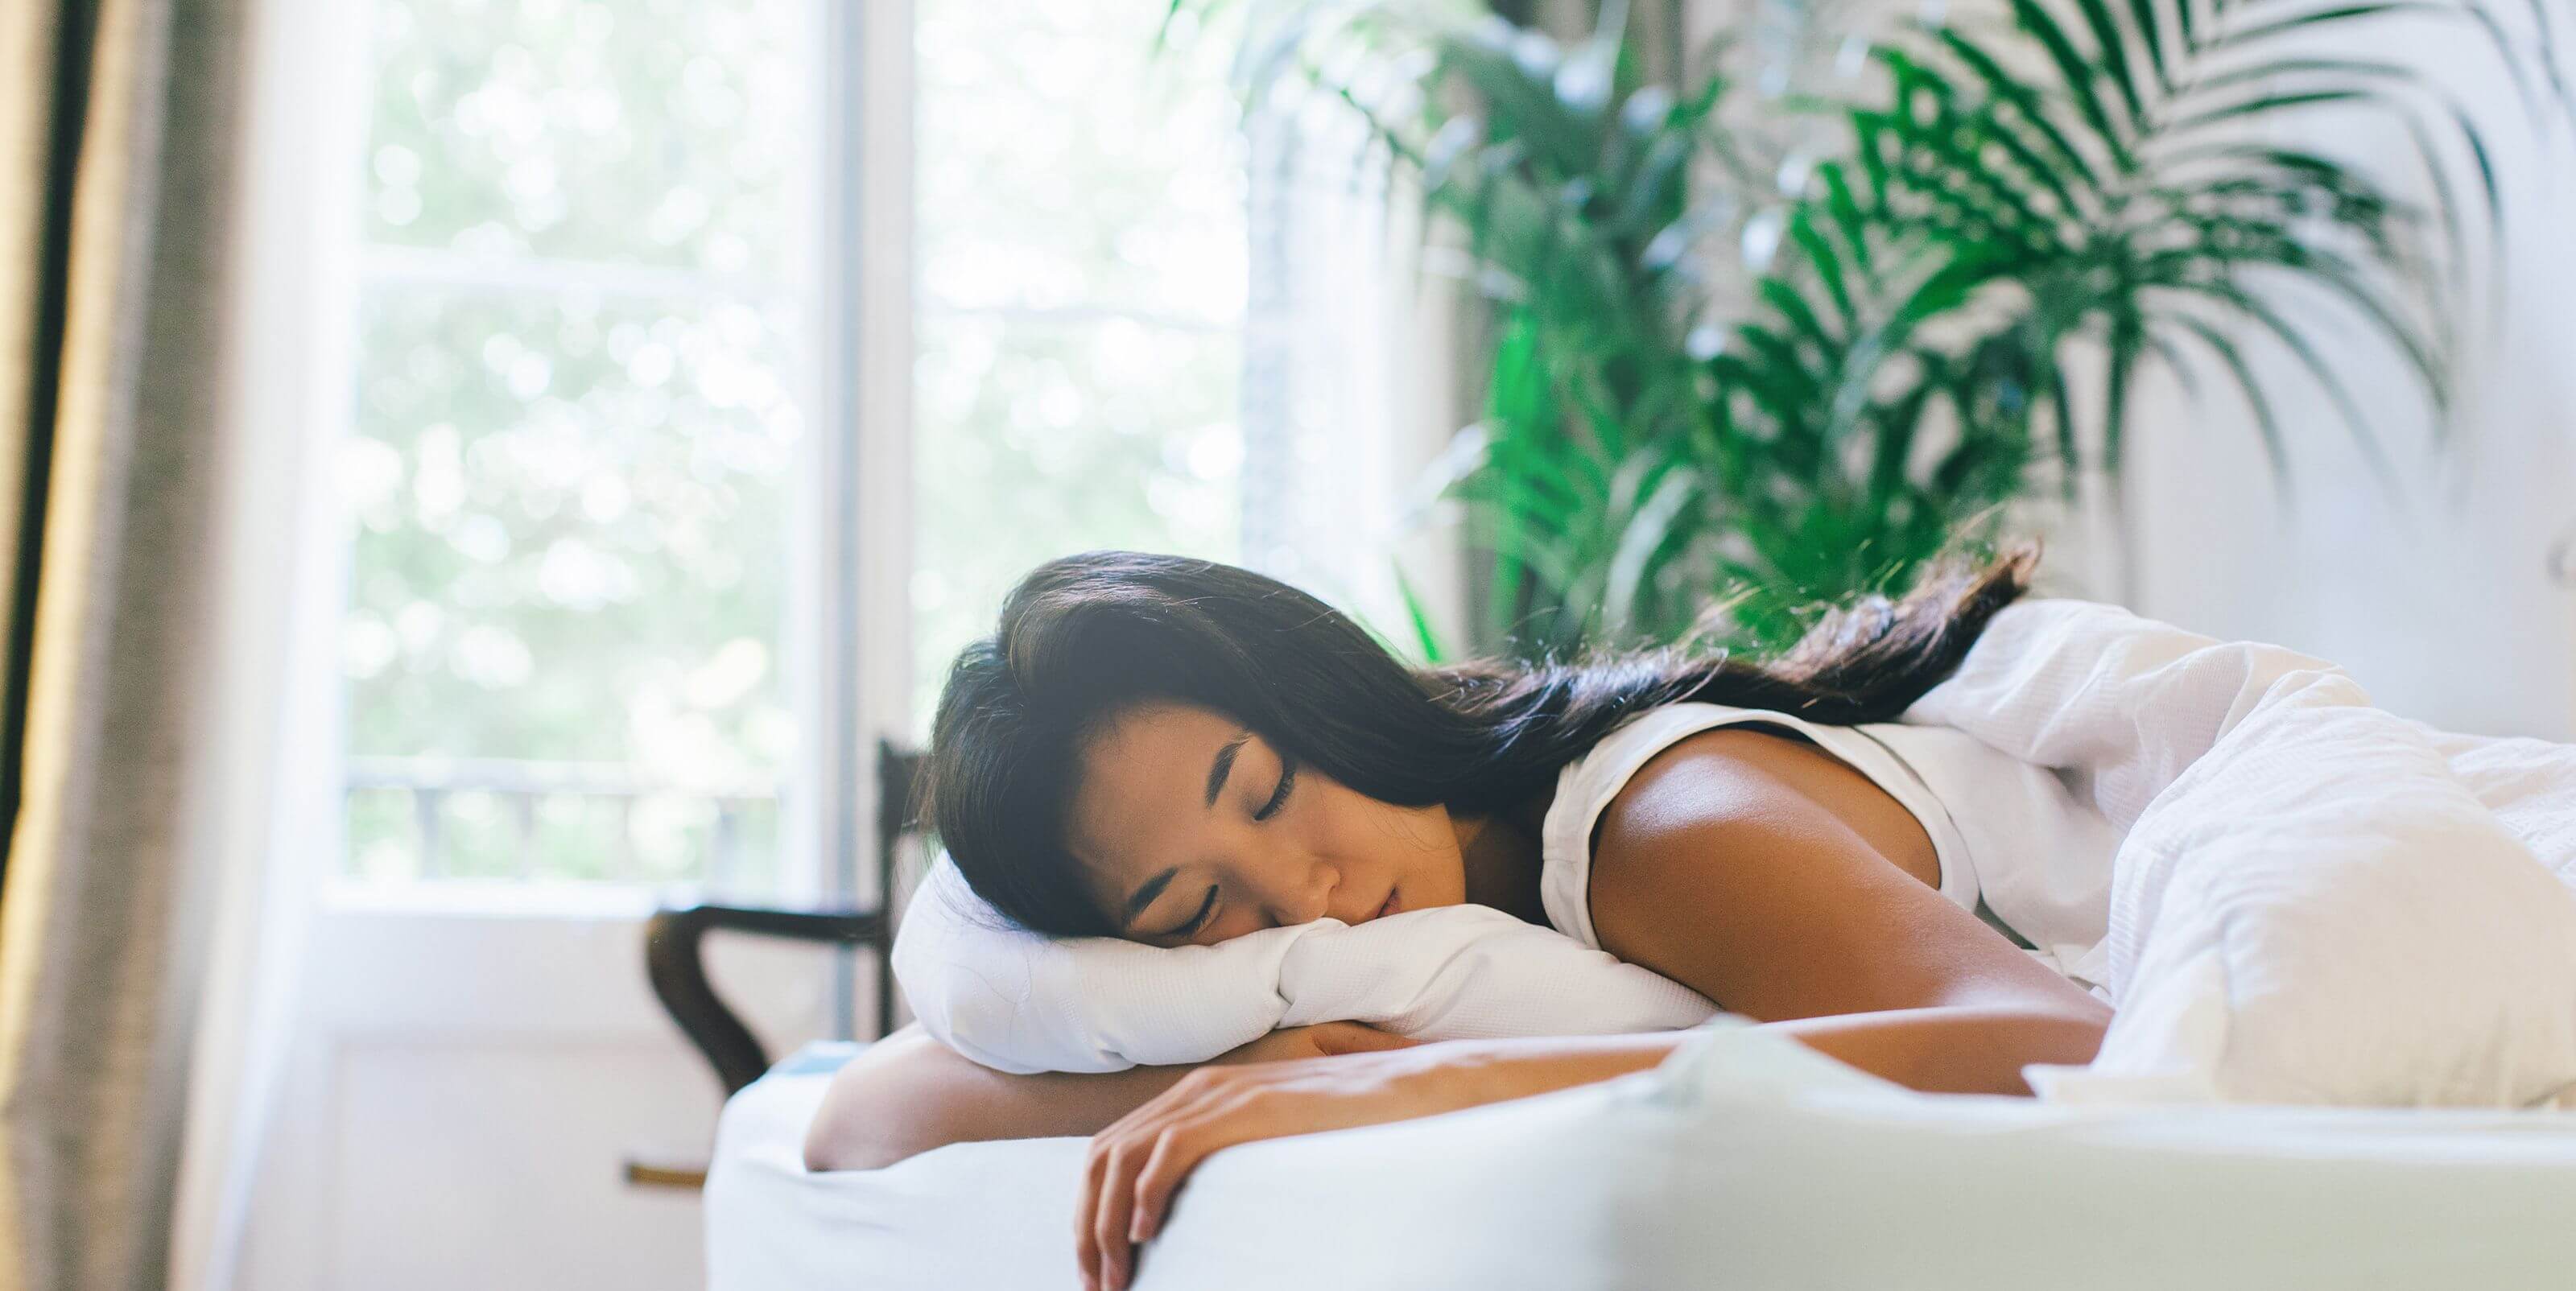 7 Essential oils for better sleep